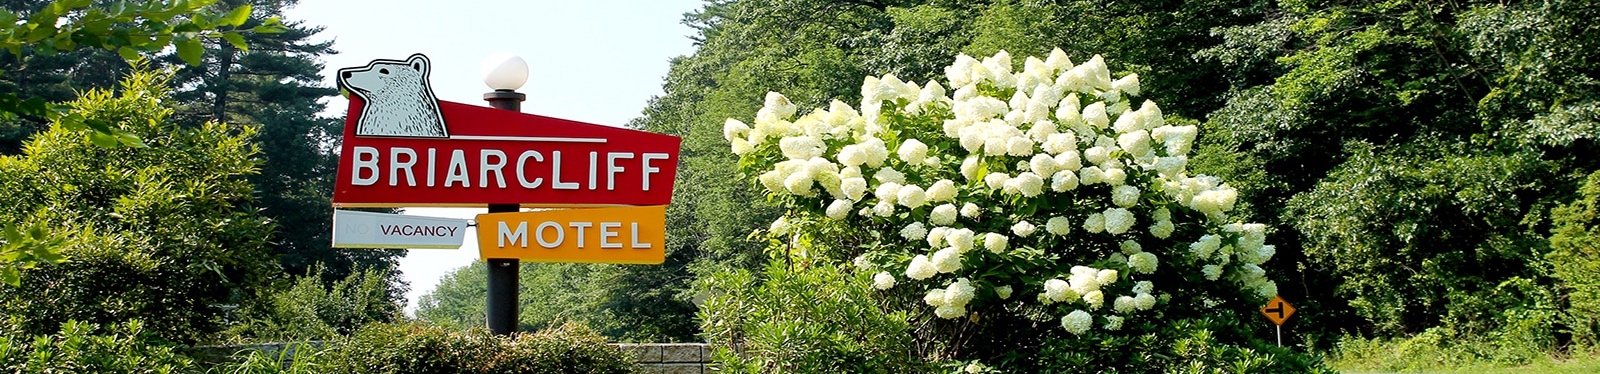 briarcliff motel